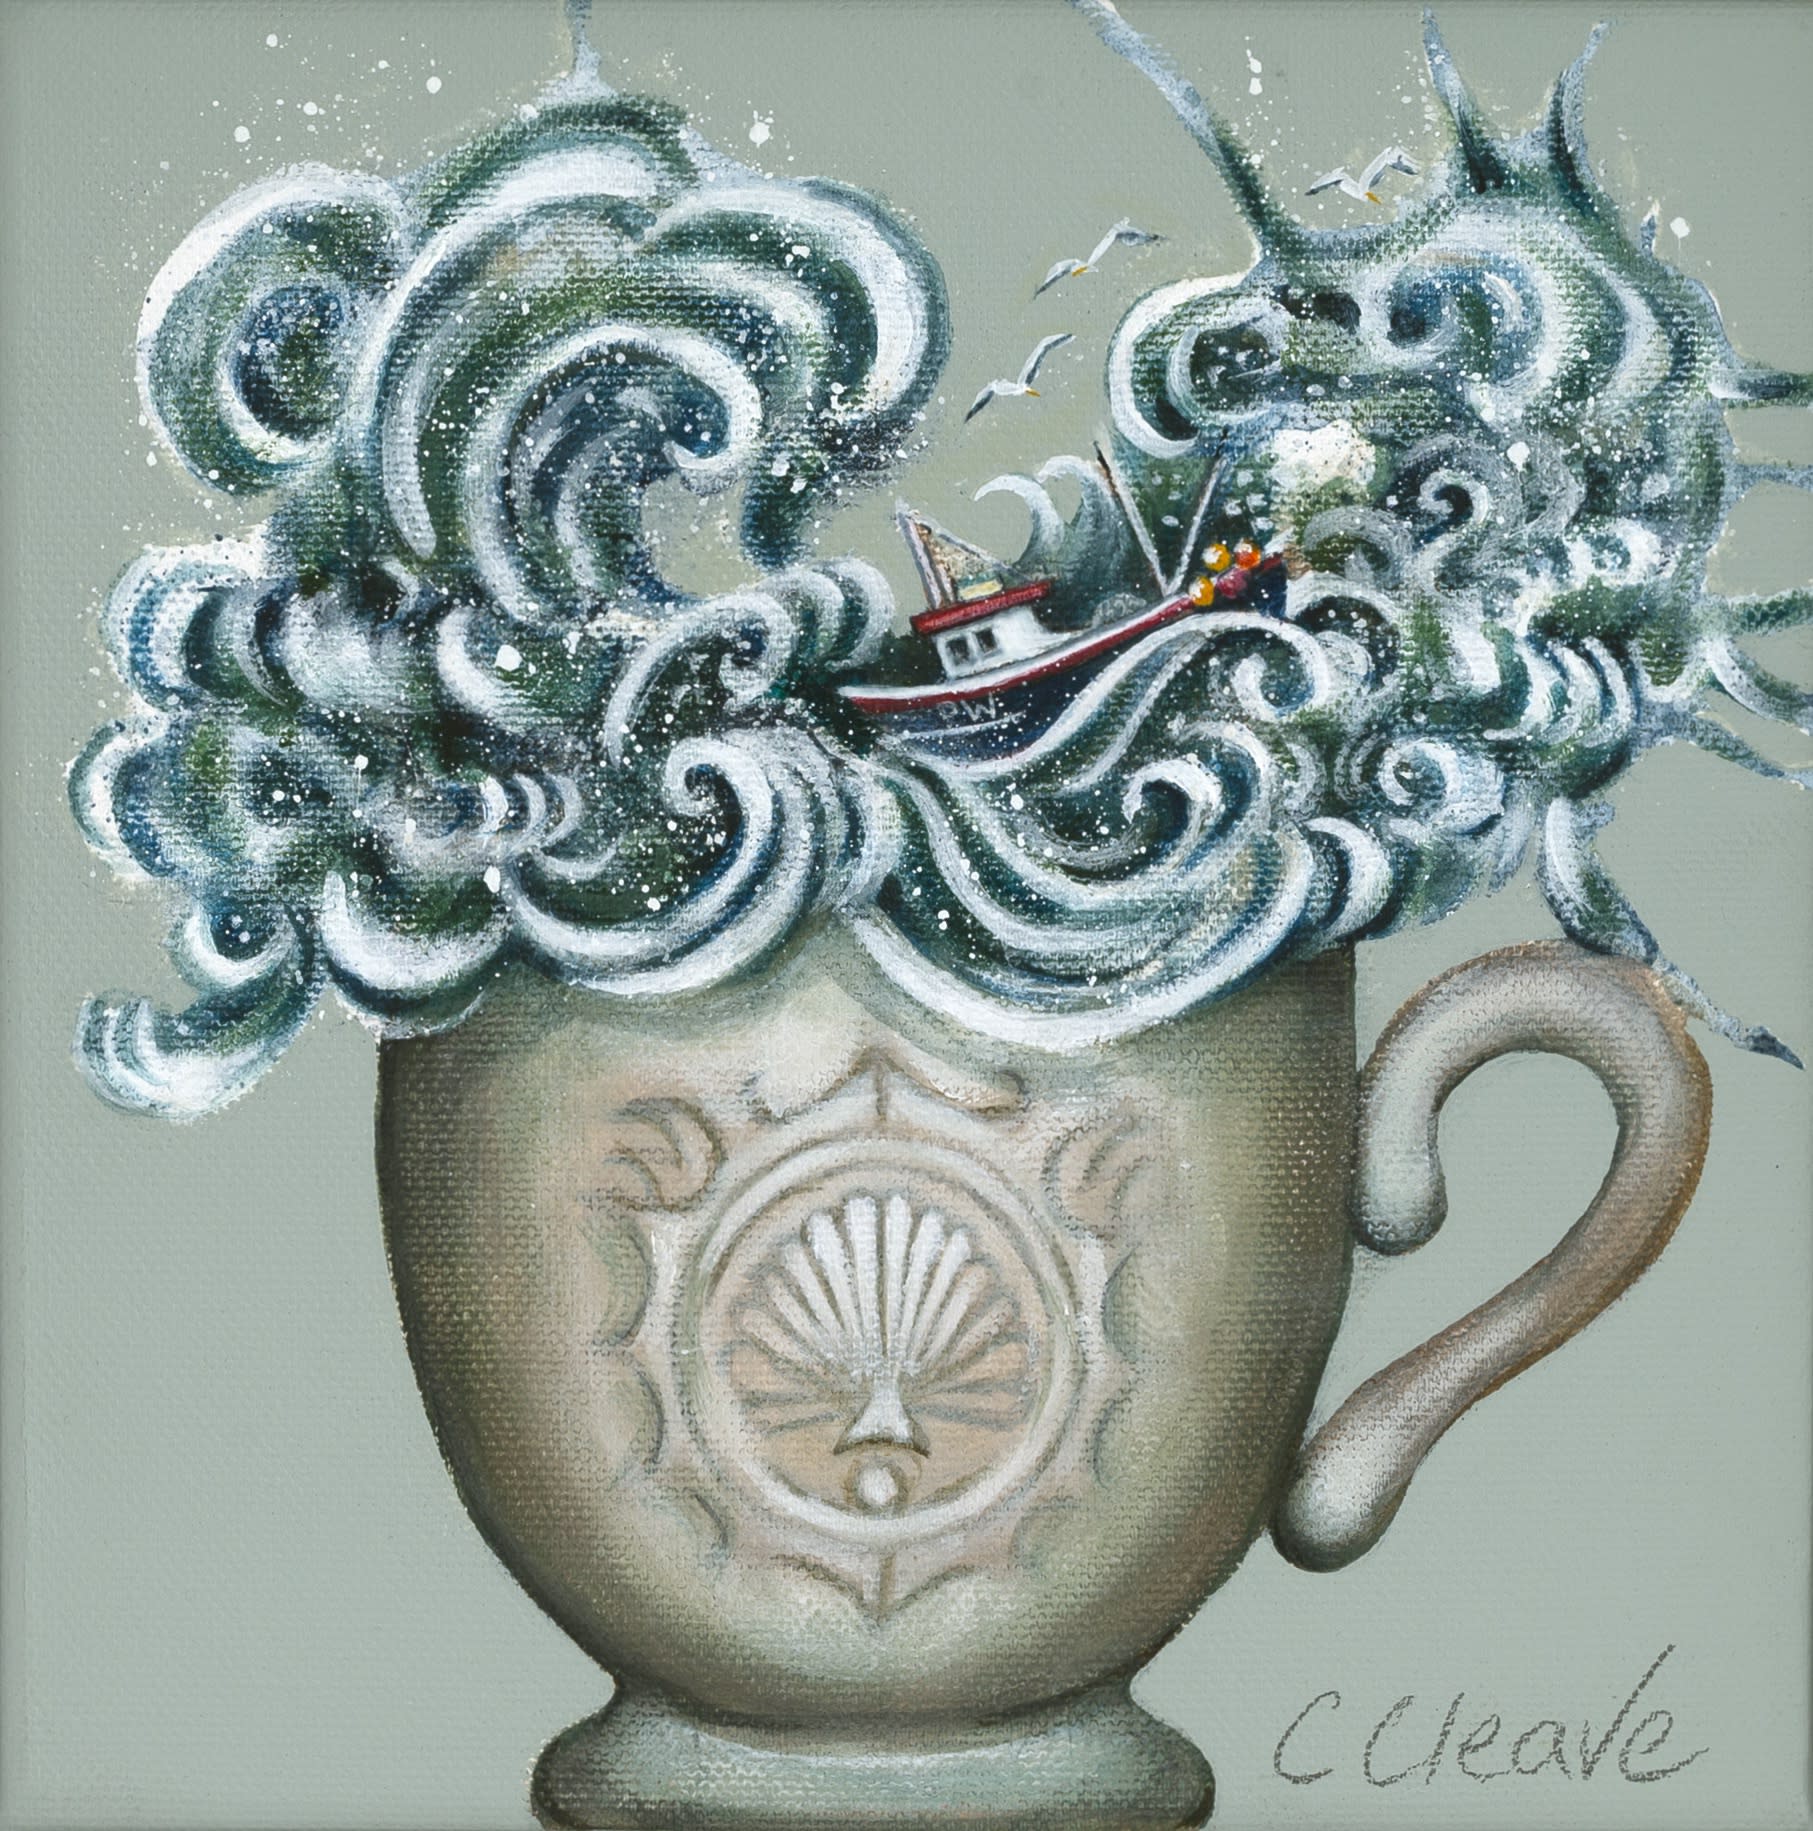 Storm in a Teacup: Caroline Cleave